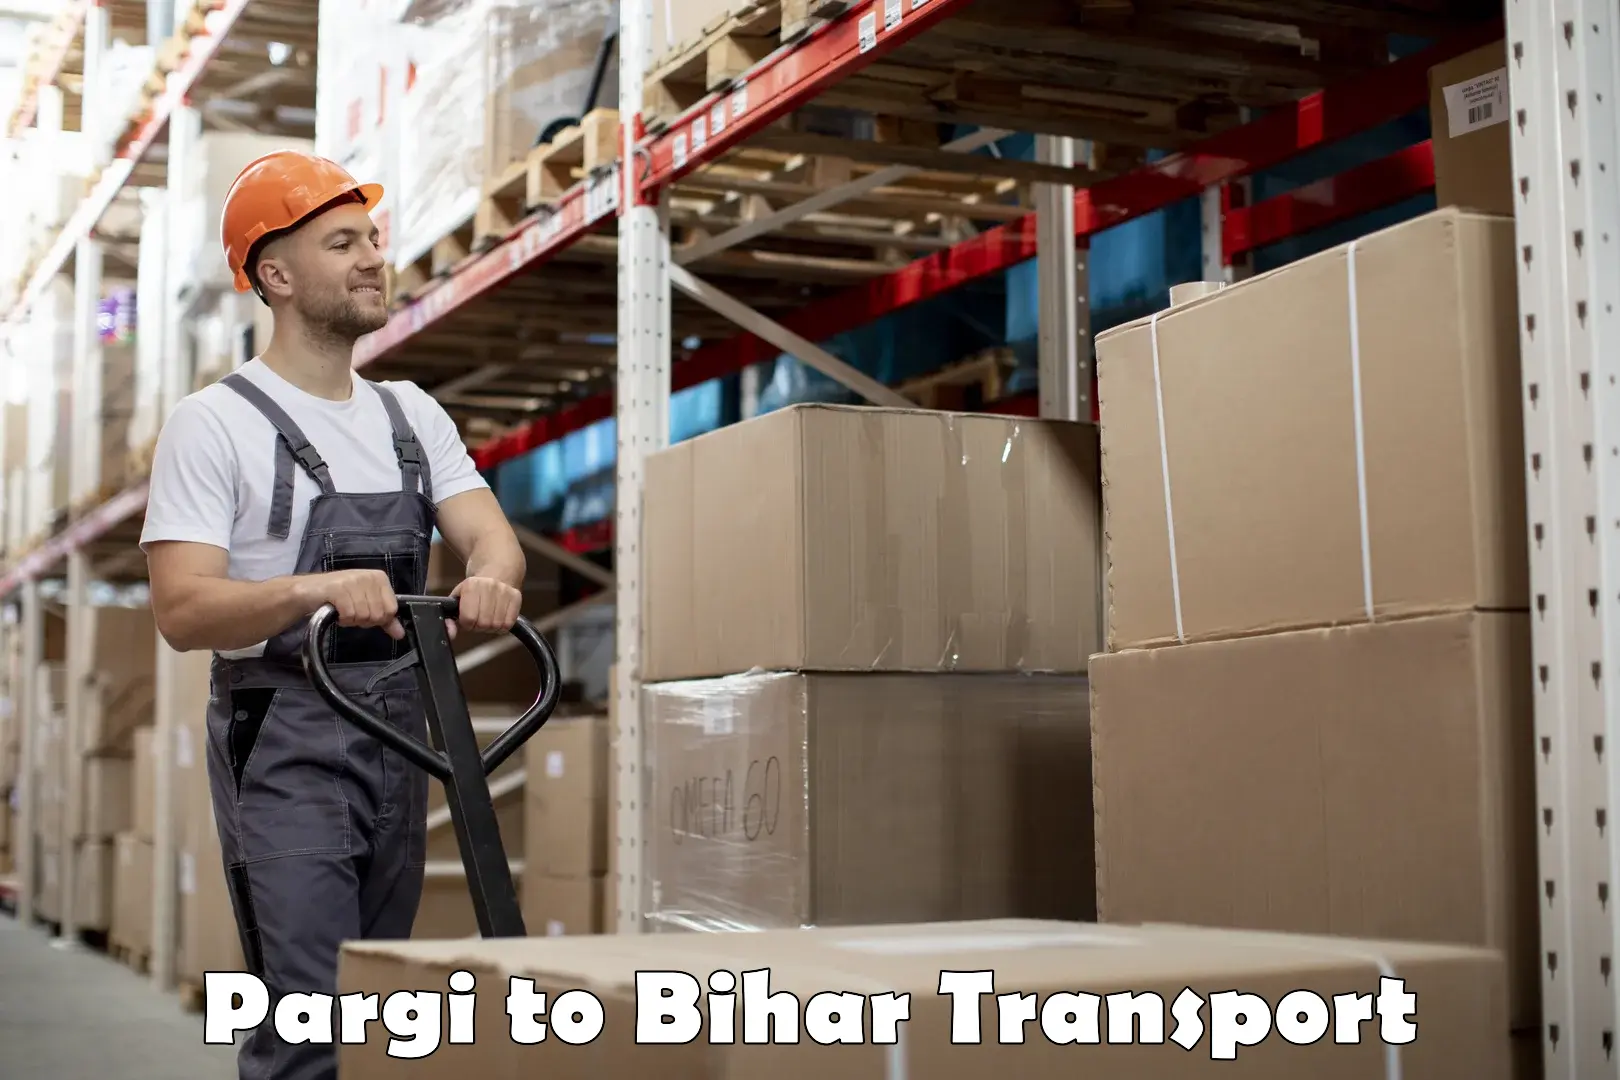 Truck transport companies in India Pargi to Dinara